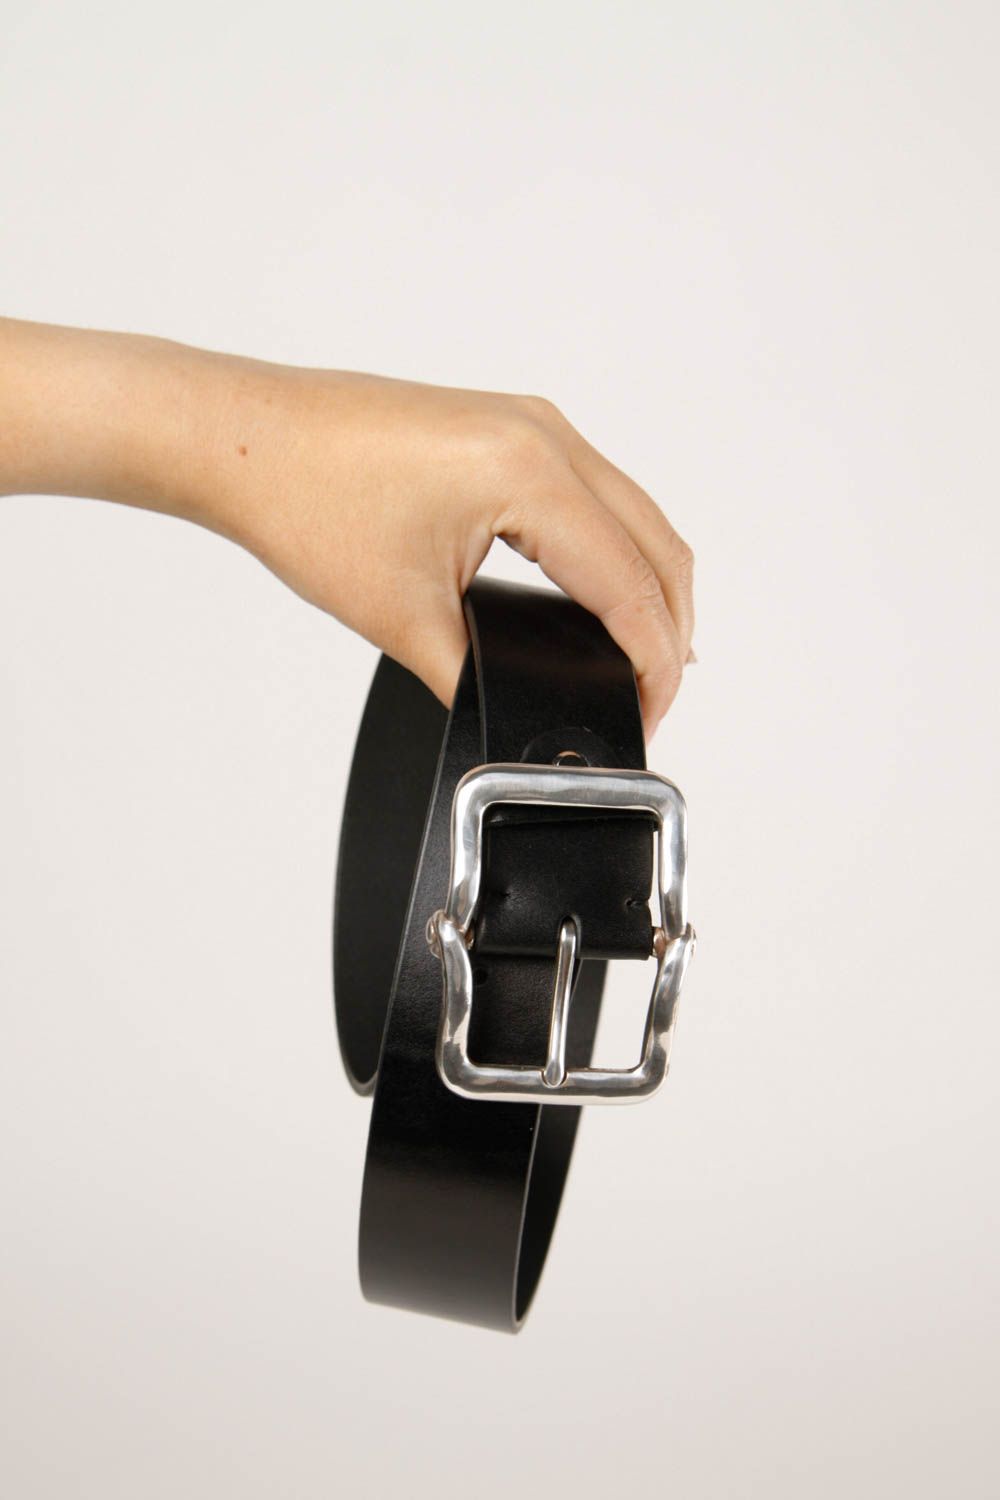 Cinturón de cuero natural accesorio de moda hecho a mano ropa masculina foto 2